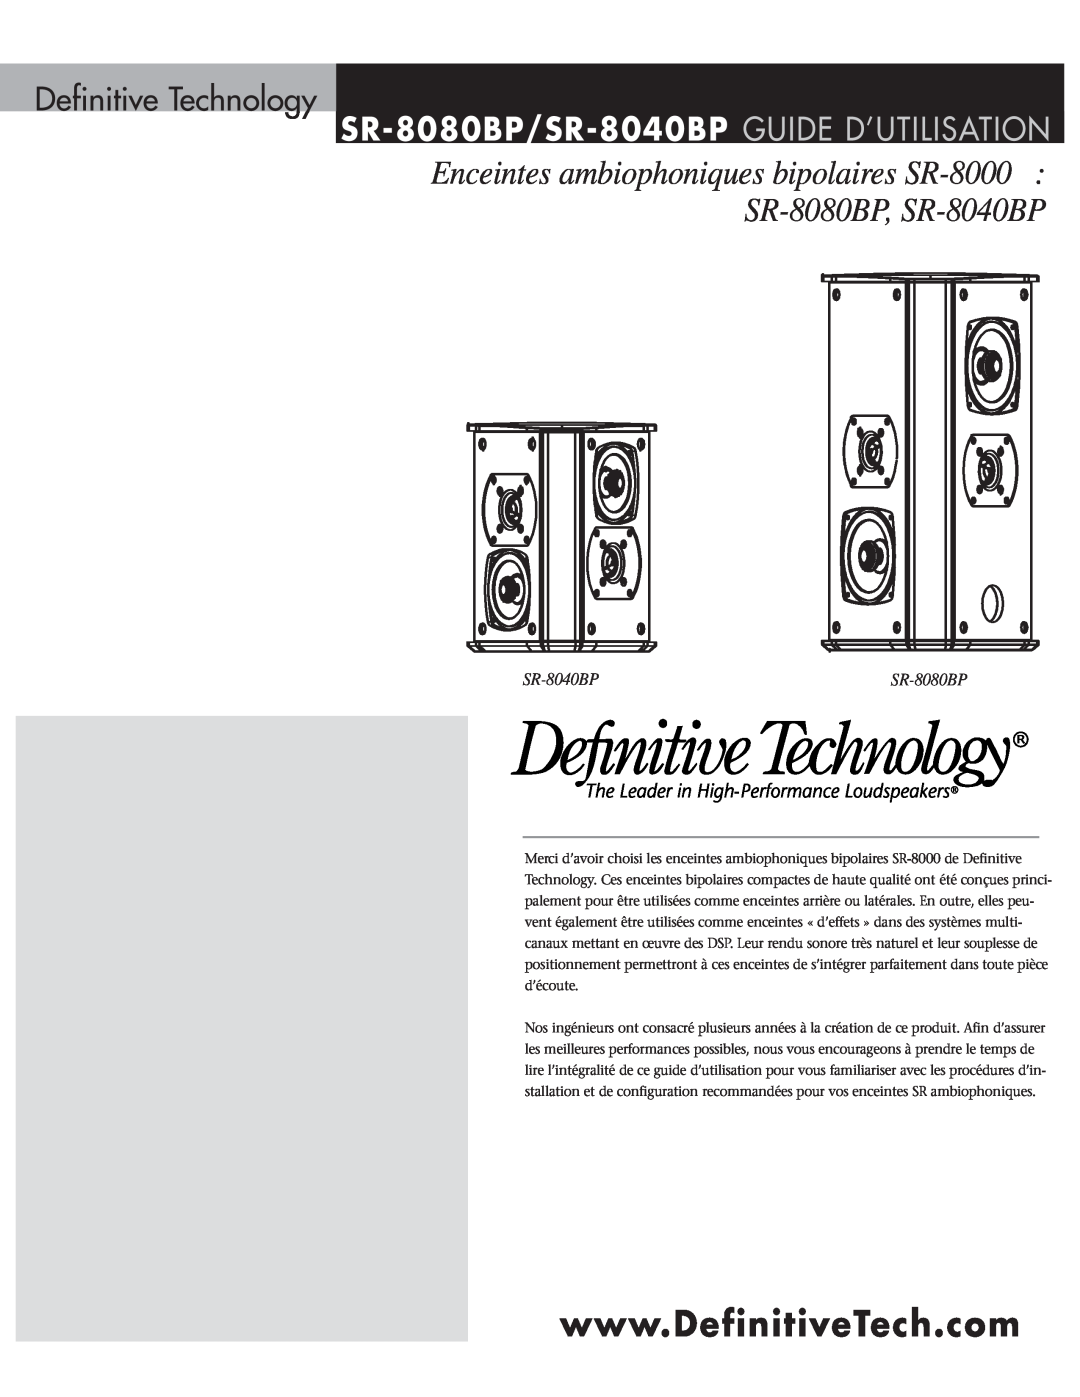 Definitive Technology owner manual SR-8080BP/SR-8040BP GUIDE D’UTILISATION, Definitive Technology 